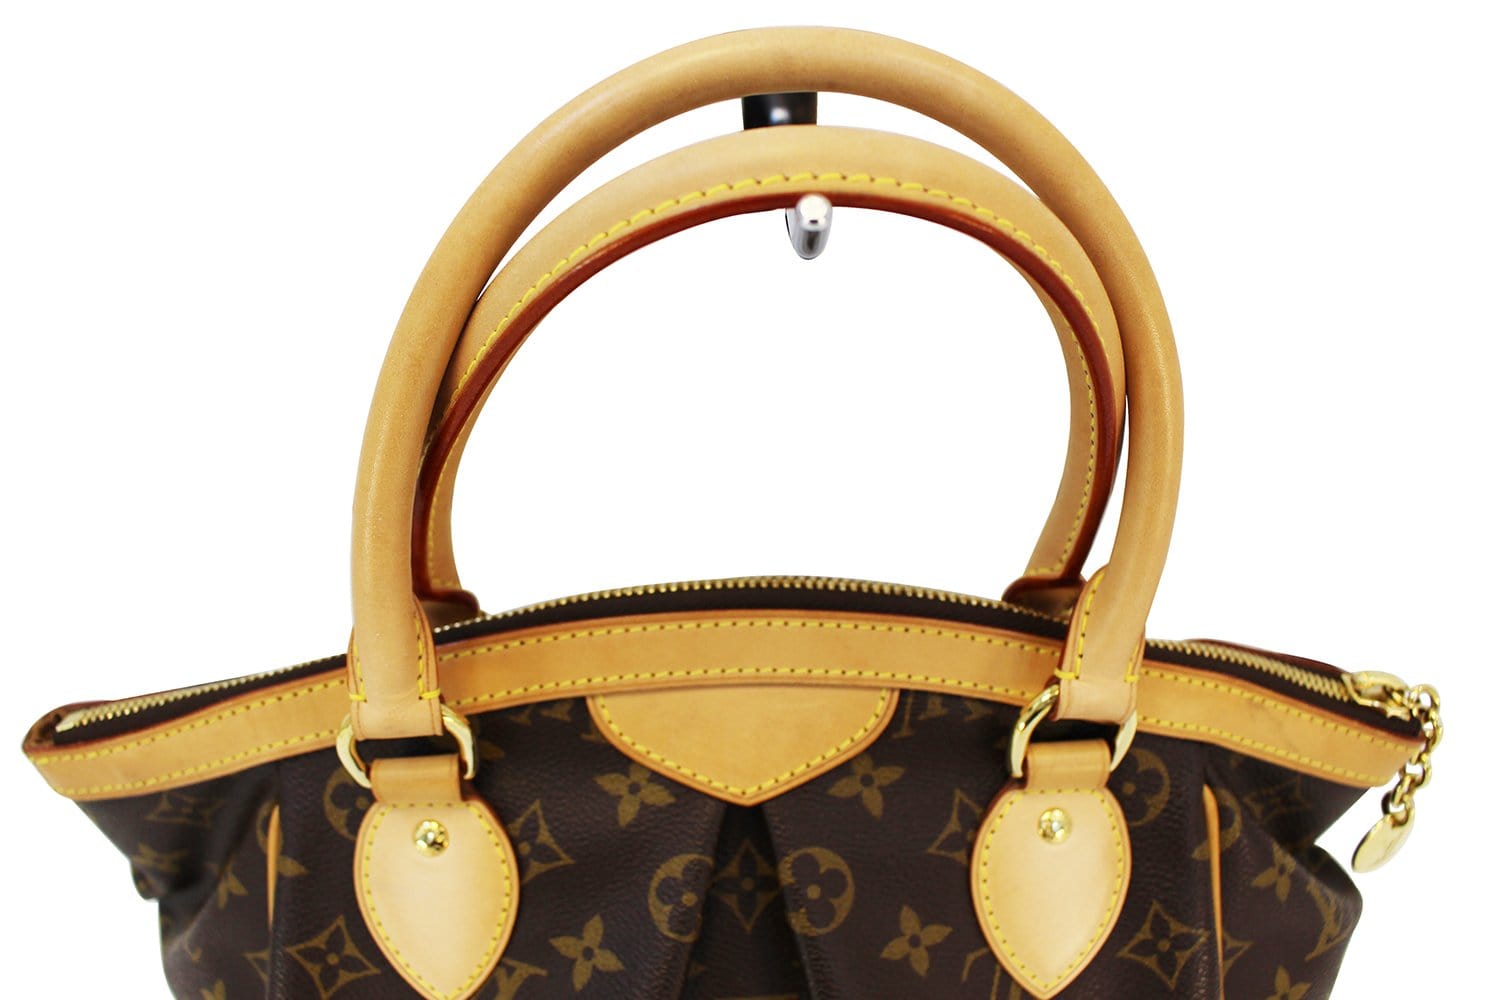 Authentic Louis Vuitton Classic Monogram Canvas Tivoli PM Handbag